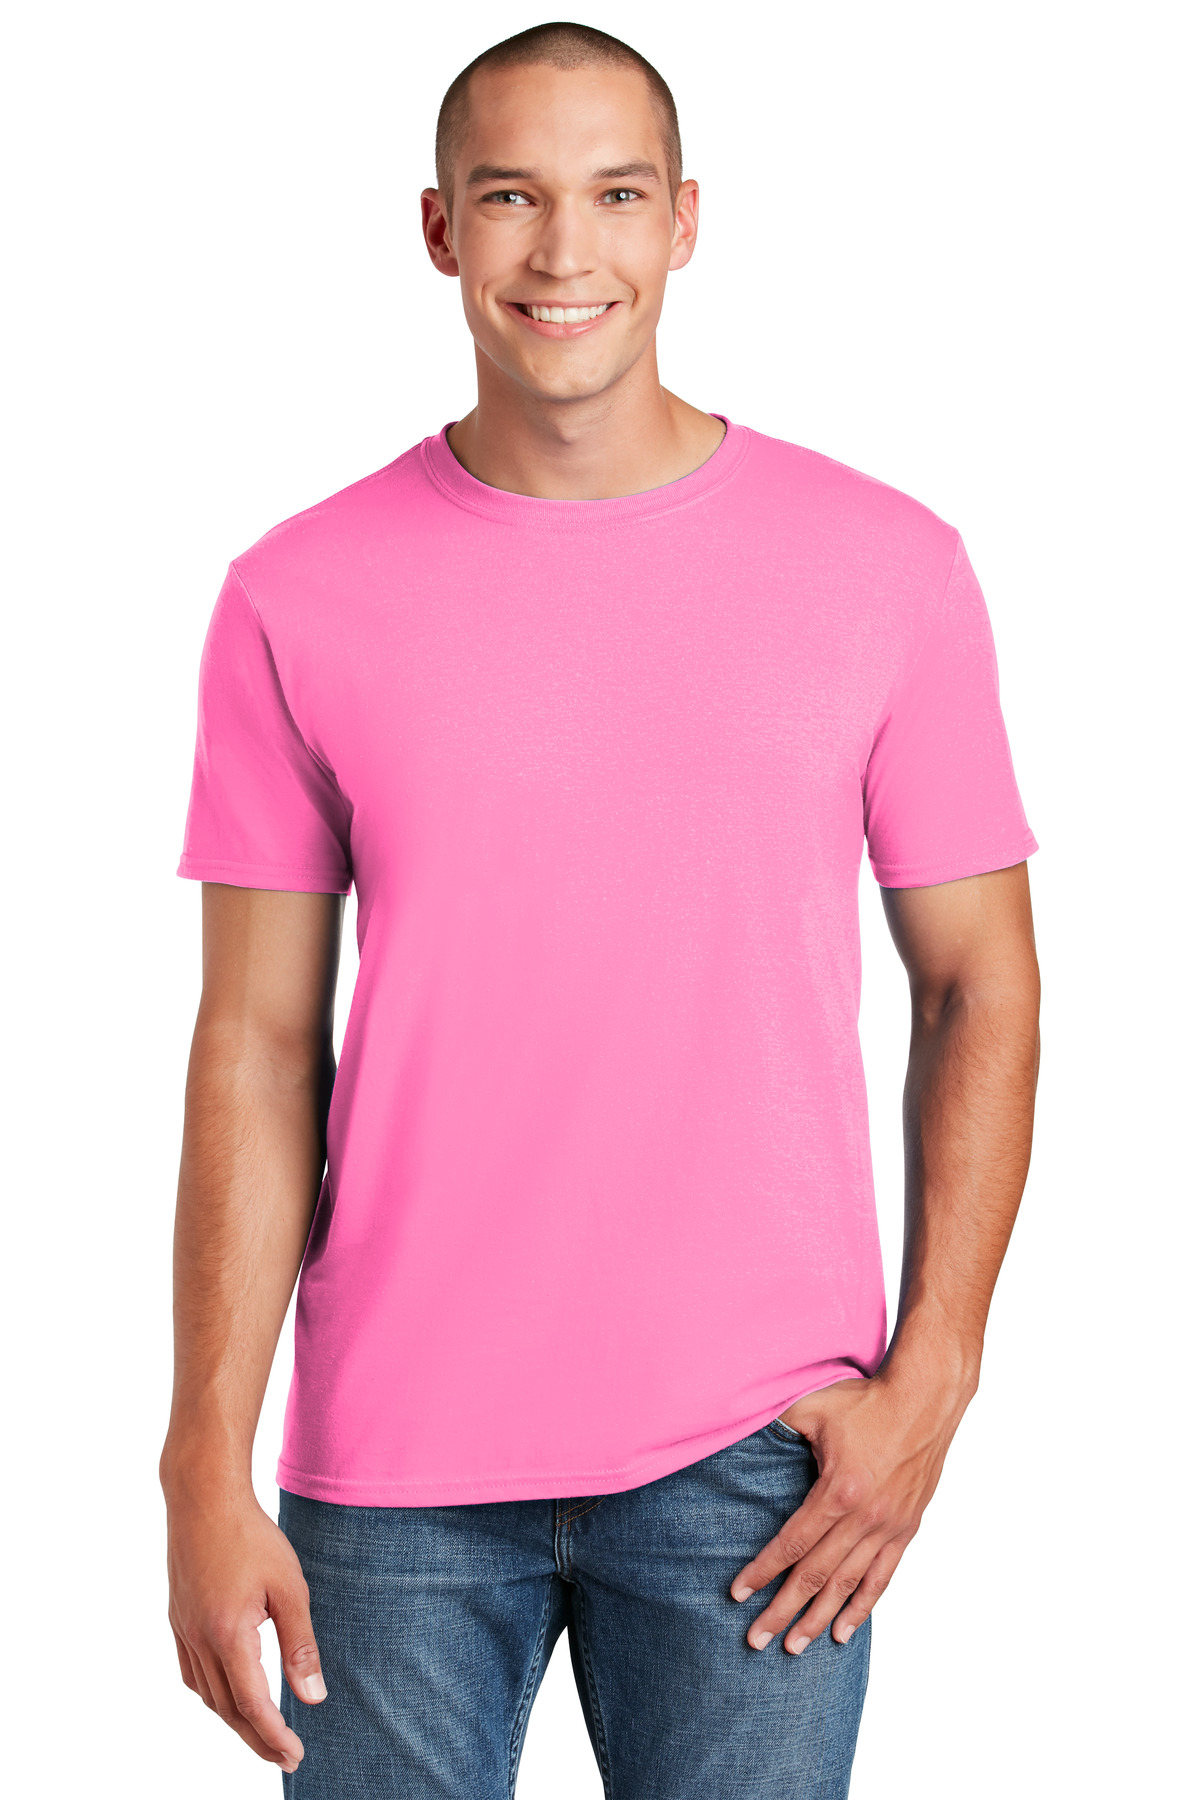 https://images.shirtspace.com/fullsize/mjK6uvlfRhhSjChFeznmJA%3D%3D/400087/1257-gildan-g640-softstyle-t-shirt-front-azalea.jpg